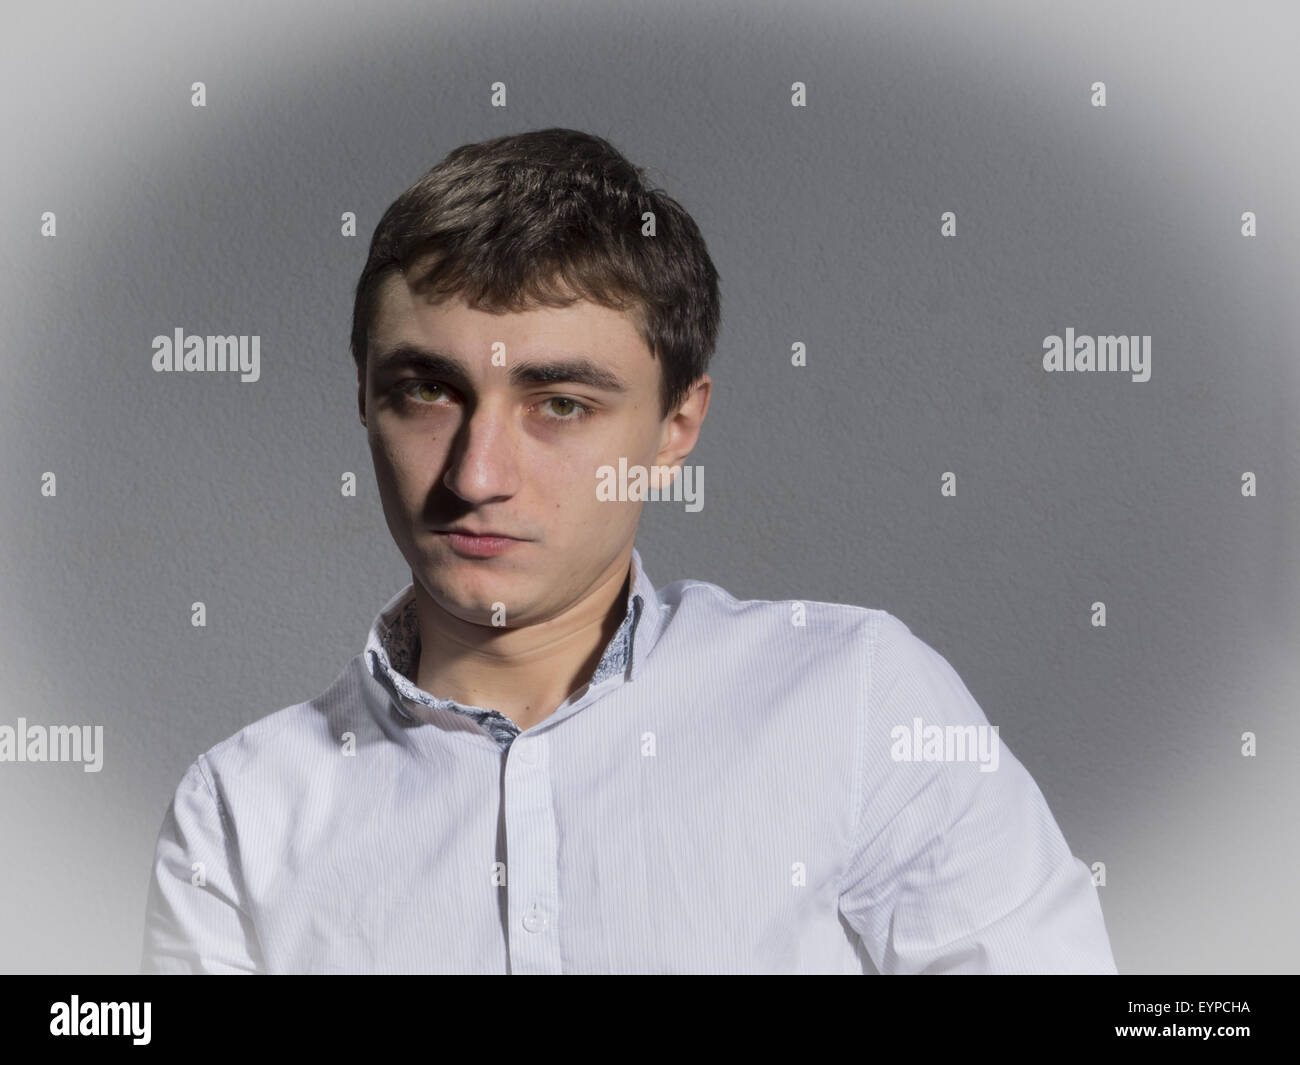 Young Man In A Light Shirt With Open Collar. 19th Feb, 2014. joyless © Igor Golovniov/ZUMA Wire/Alamy Live News Stock Photo